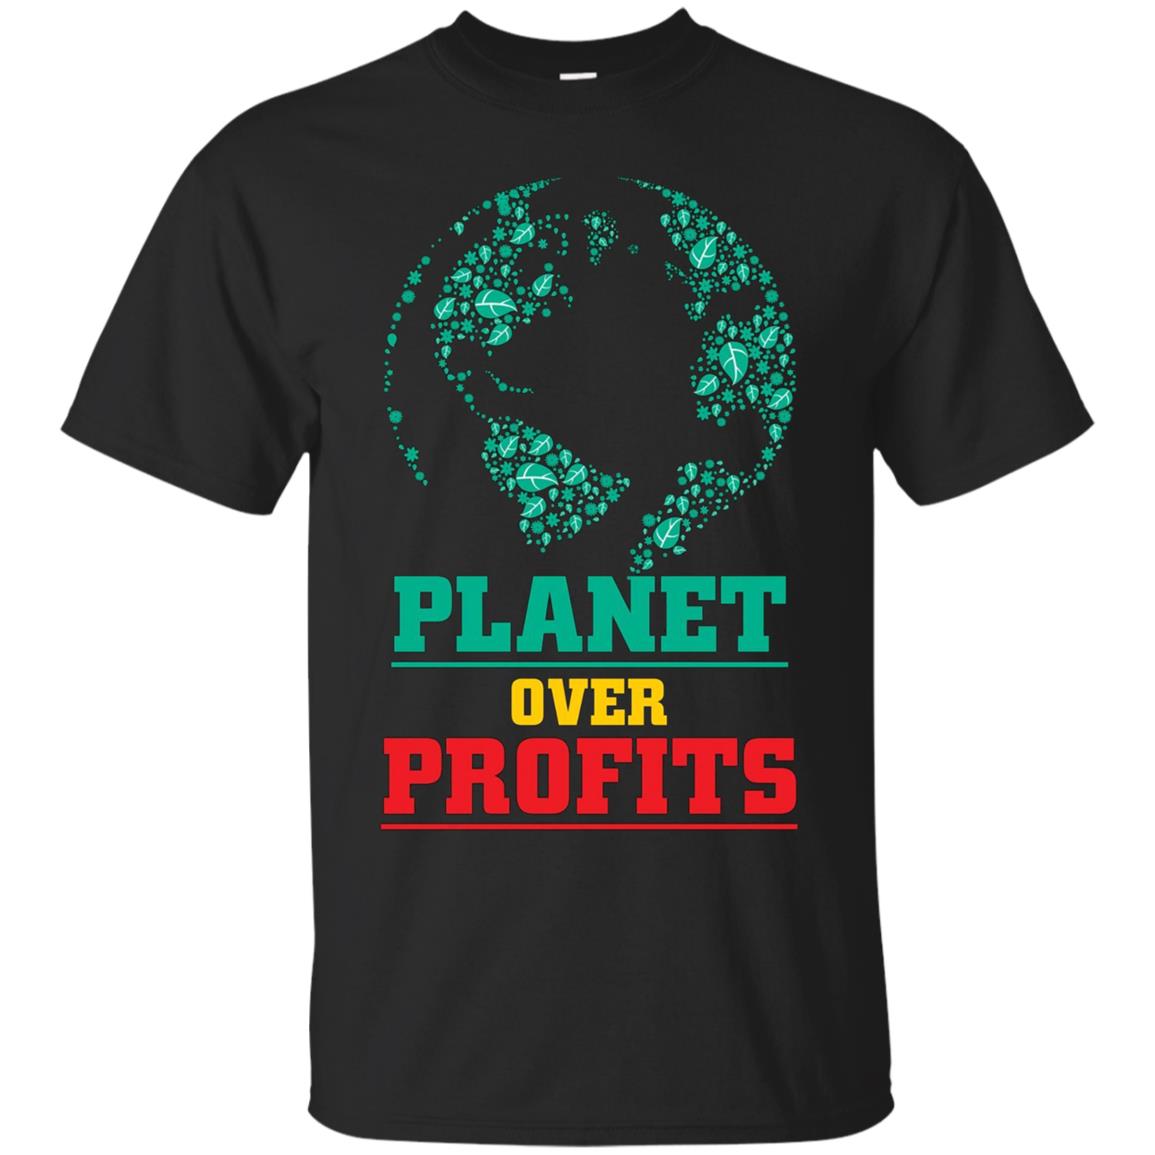  Warming Awareness Planet Over Pros T Shirt